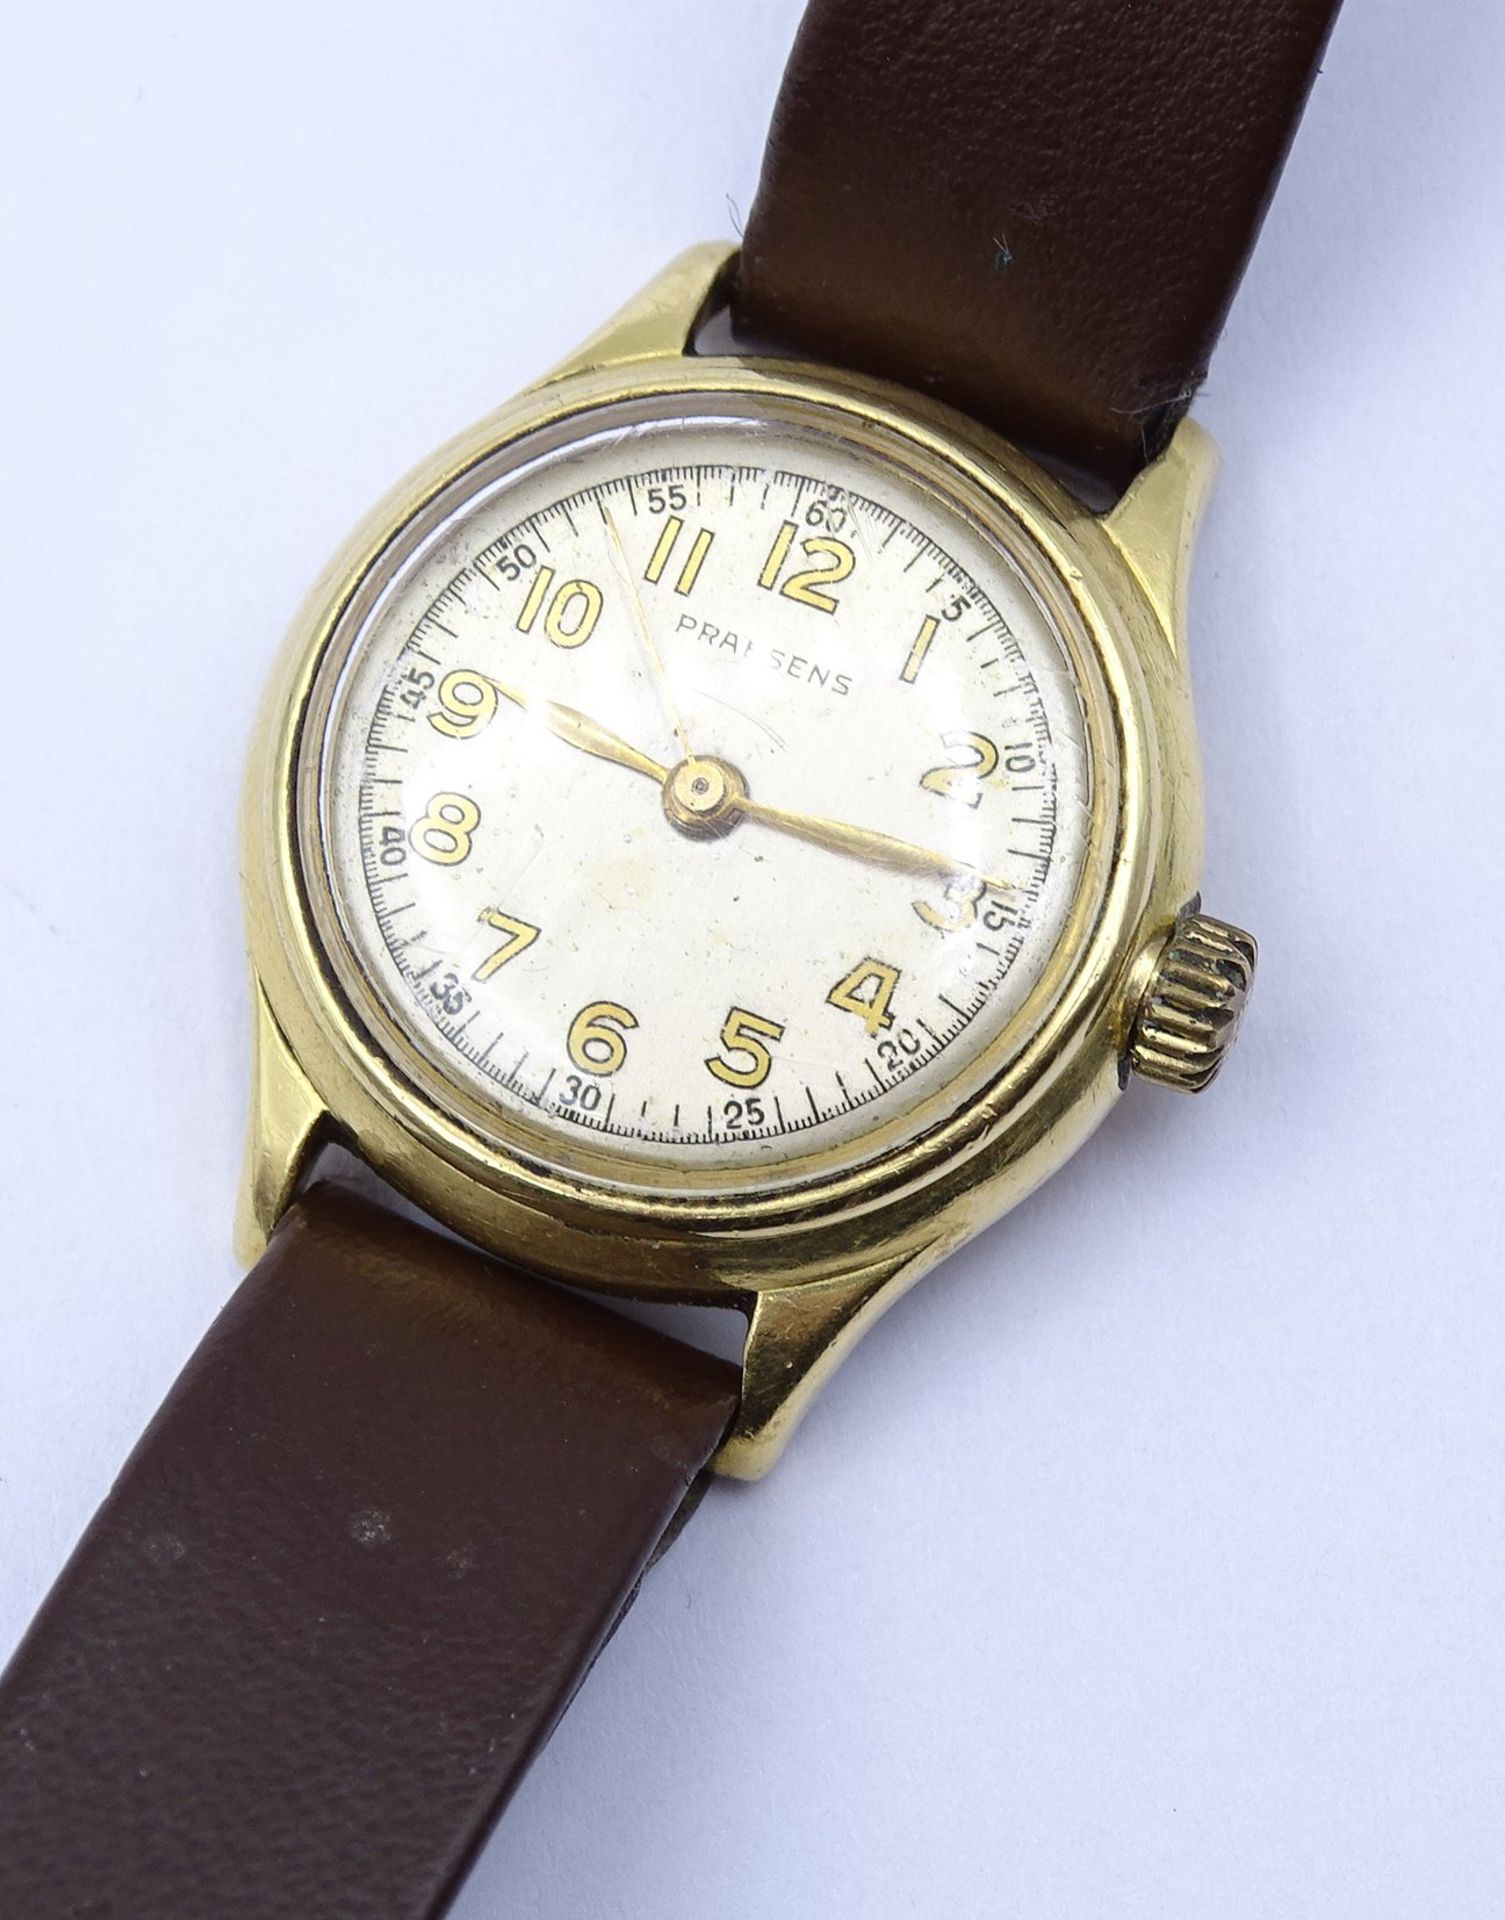 Damen Armbanduhr "Praesens", Goldgehäuse 0.750, mechanisch, Werk läuft, D. 24mm